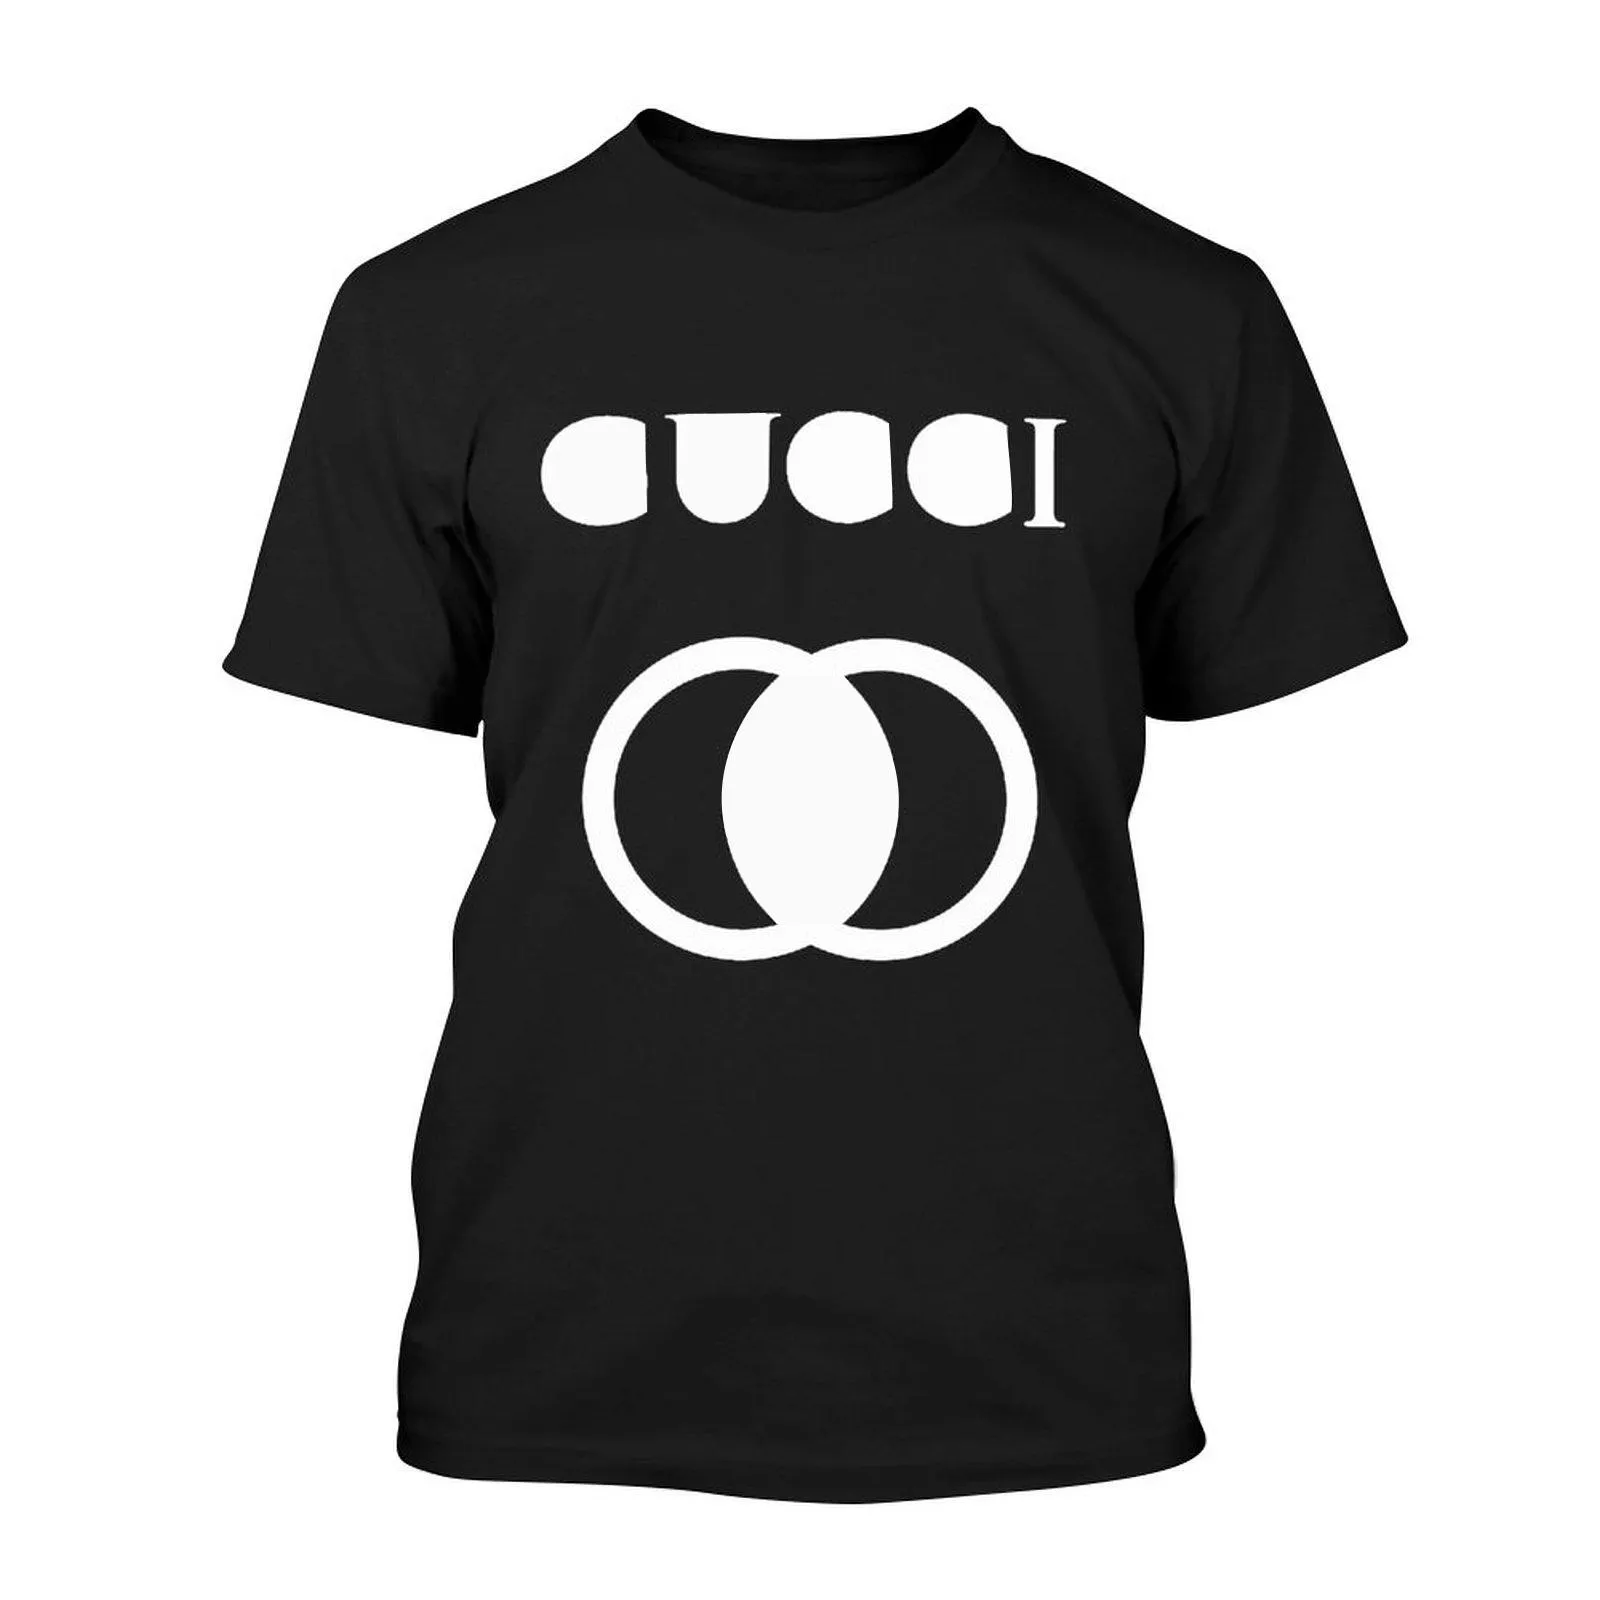 Camiseta feminina camiseta feminina camiseta de camiseta de camiseta de camiseta unissex 100% preto algod￣o branco s-5xl j15